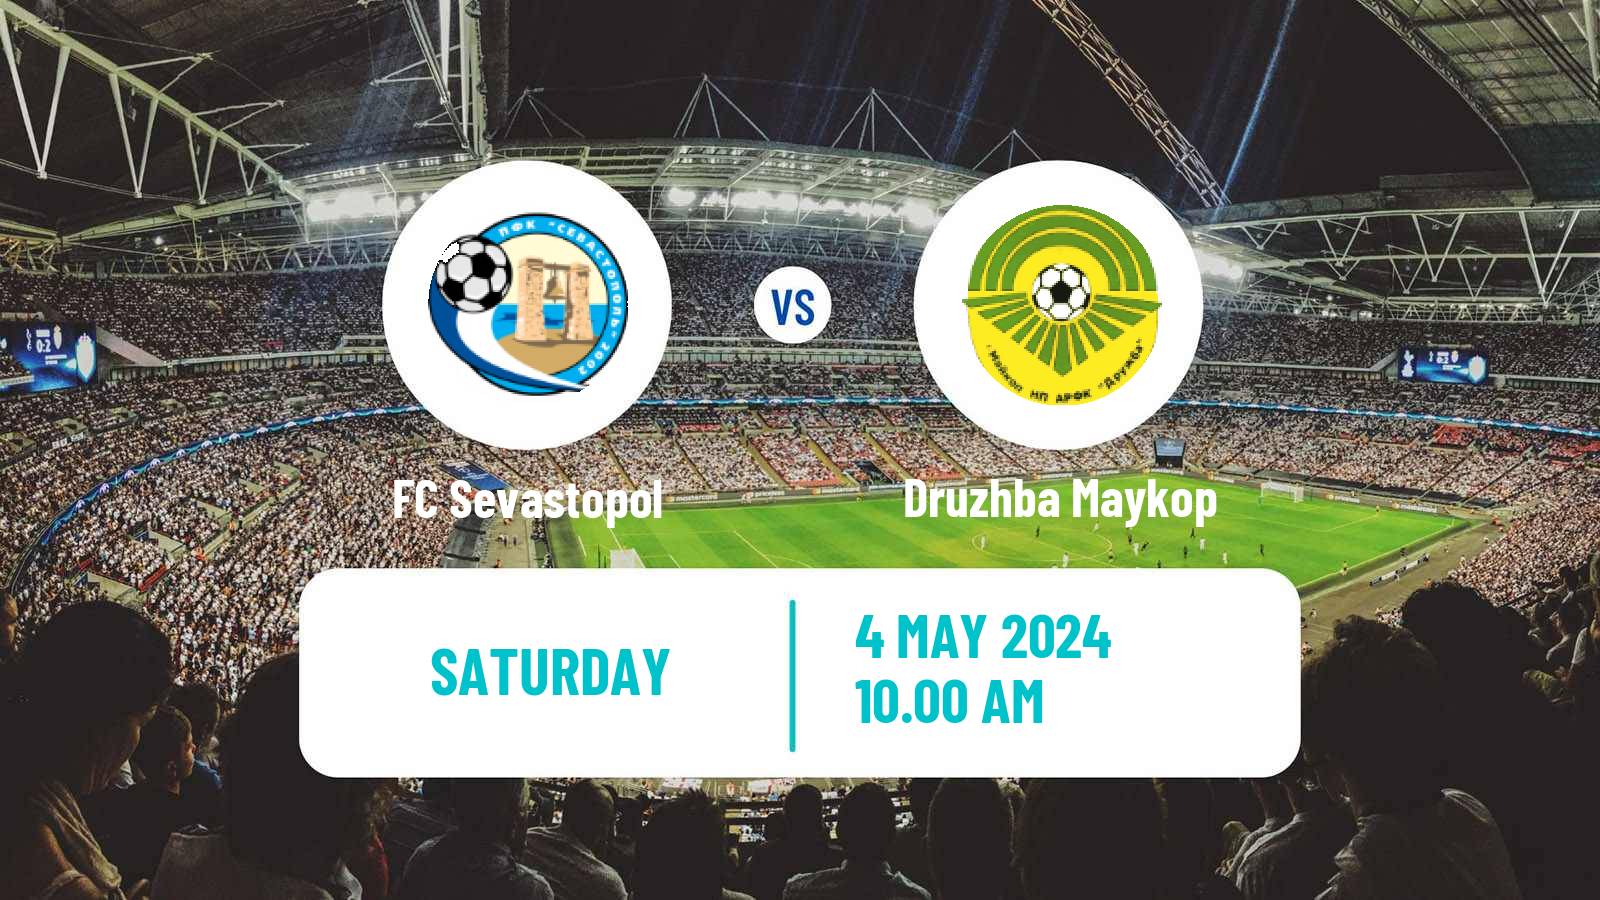 Soccer FNL 2 Division B Group 1 FC Sevastopol - Druzhba Maykop